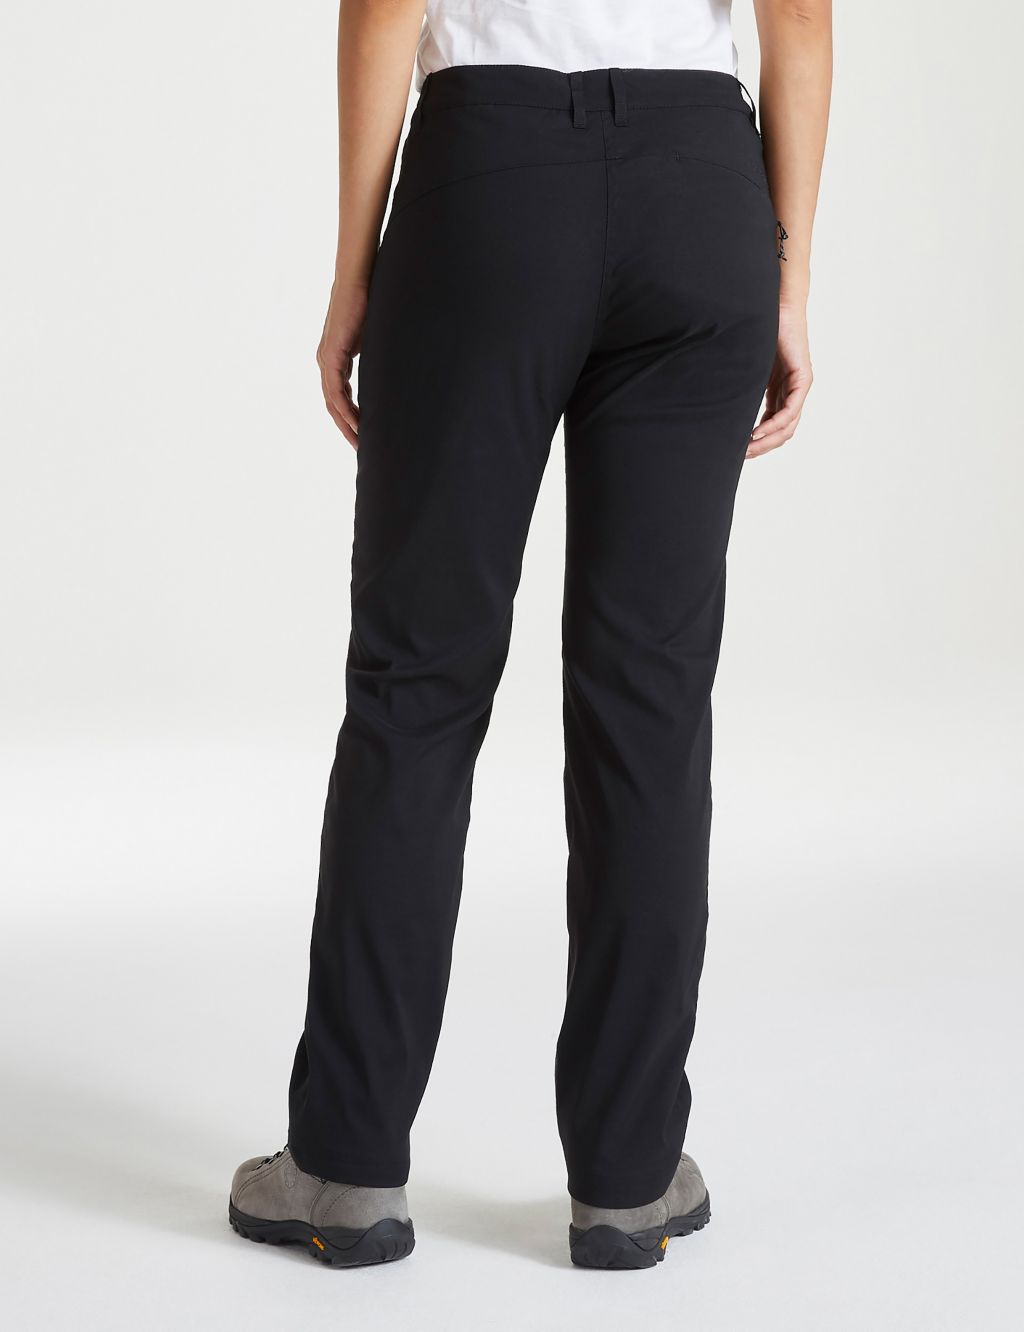 Kiwi Pro Lined Trousers image 4